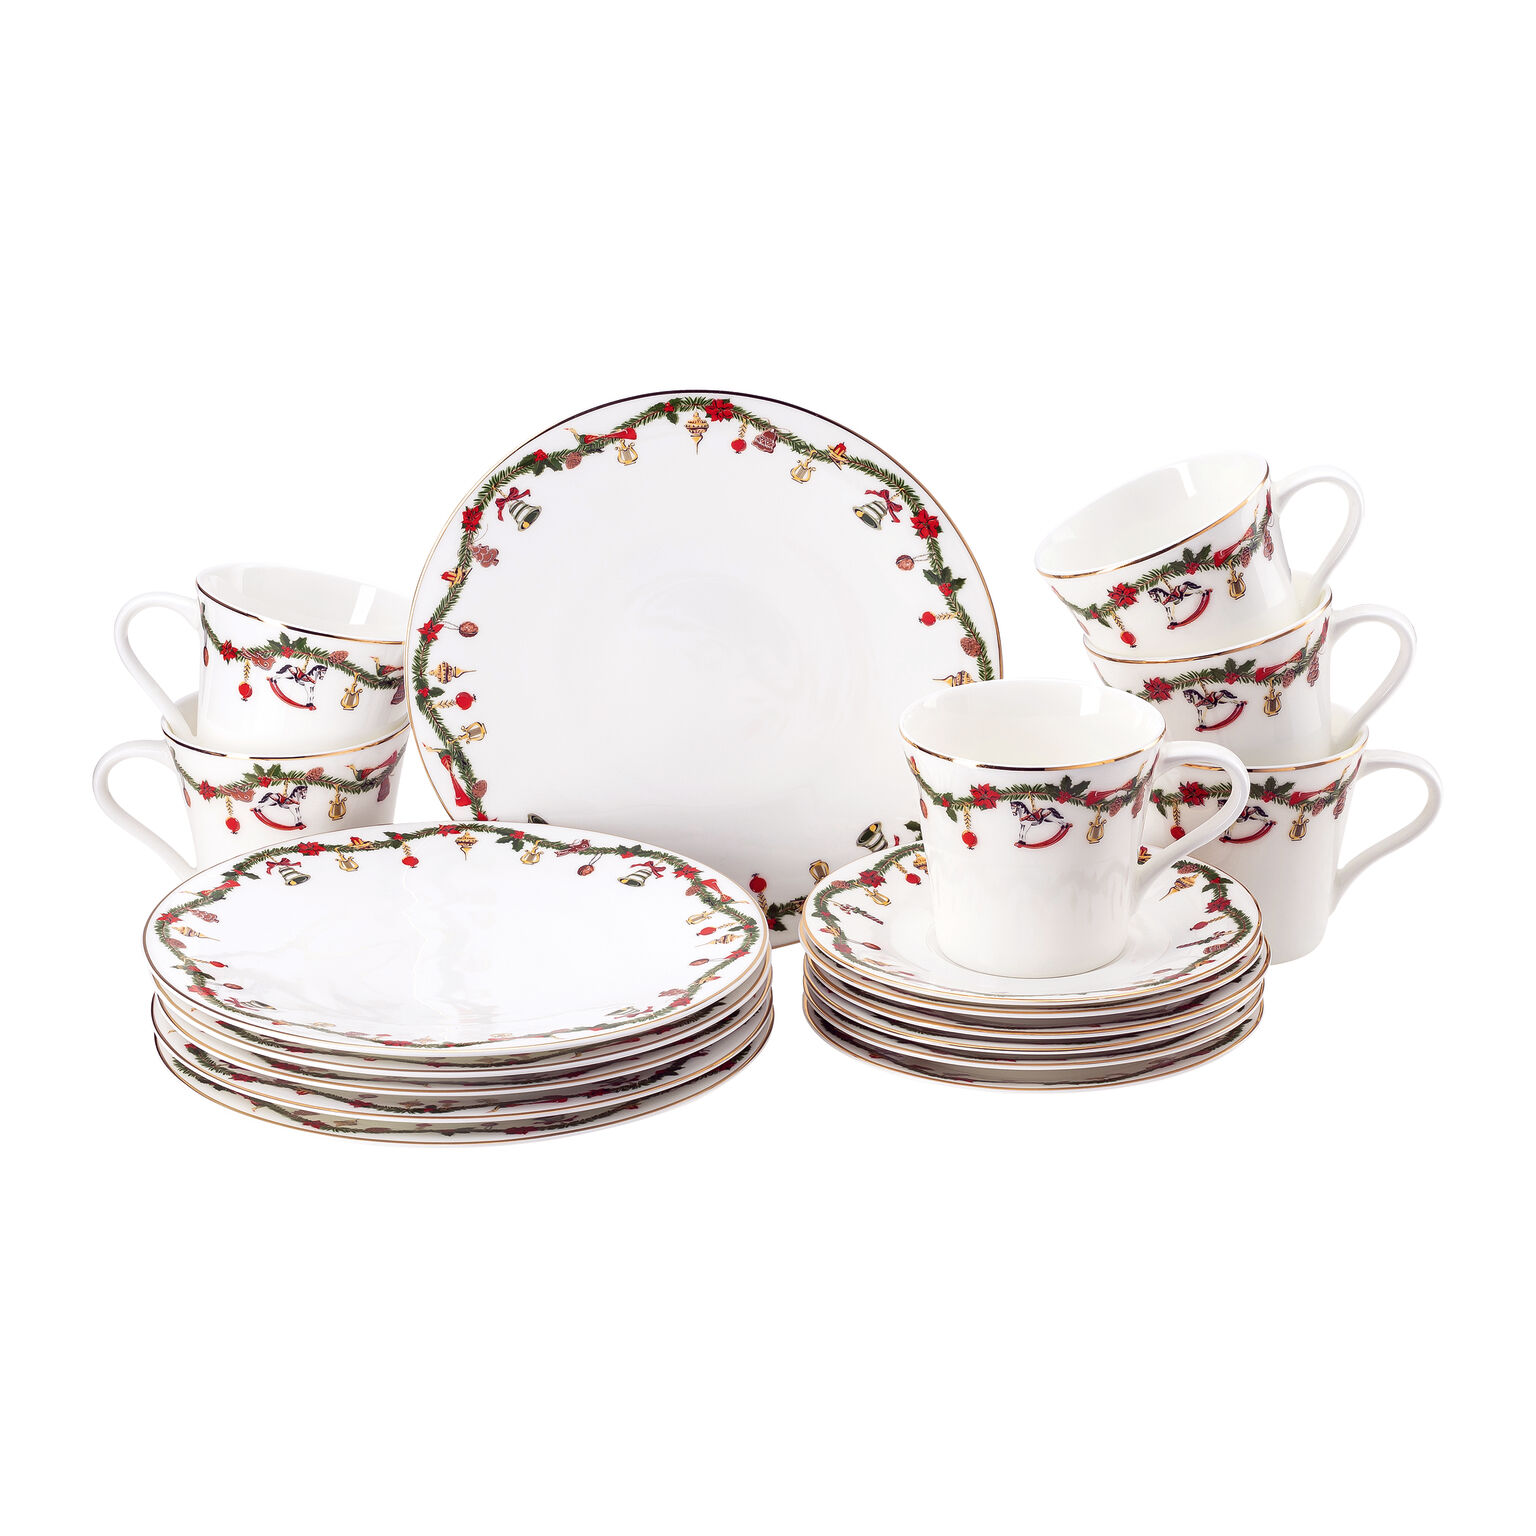 Dinnerware & Gift Sets | Hutschenreuther Porcelain Online Shop